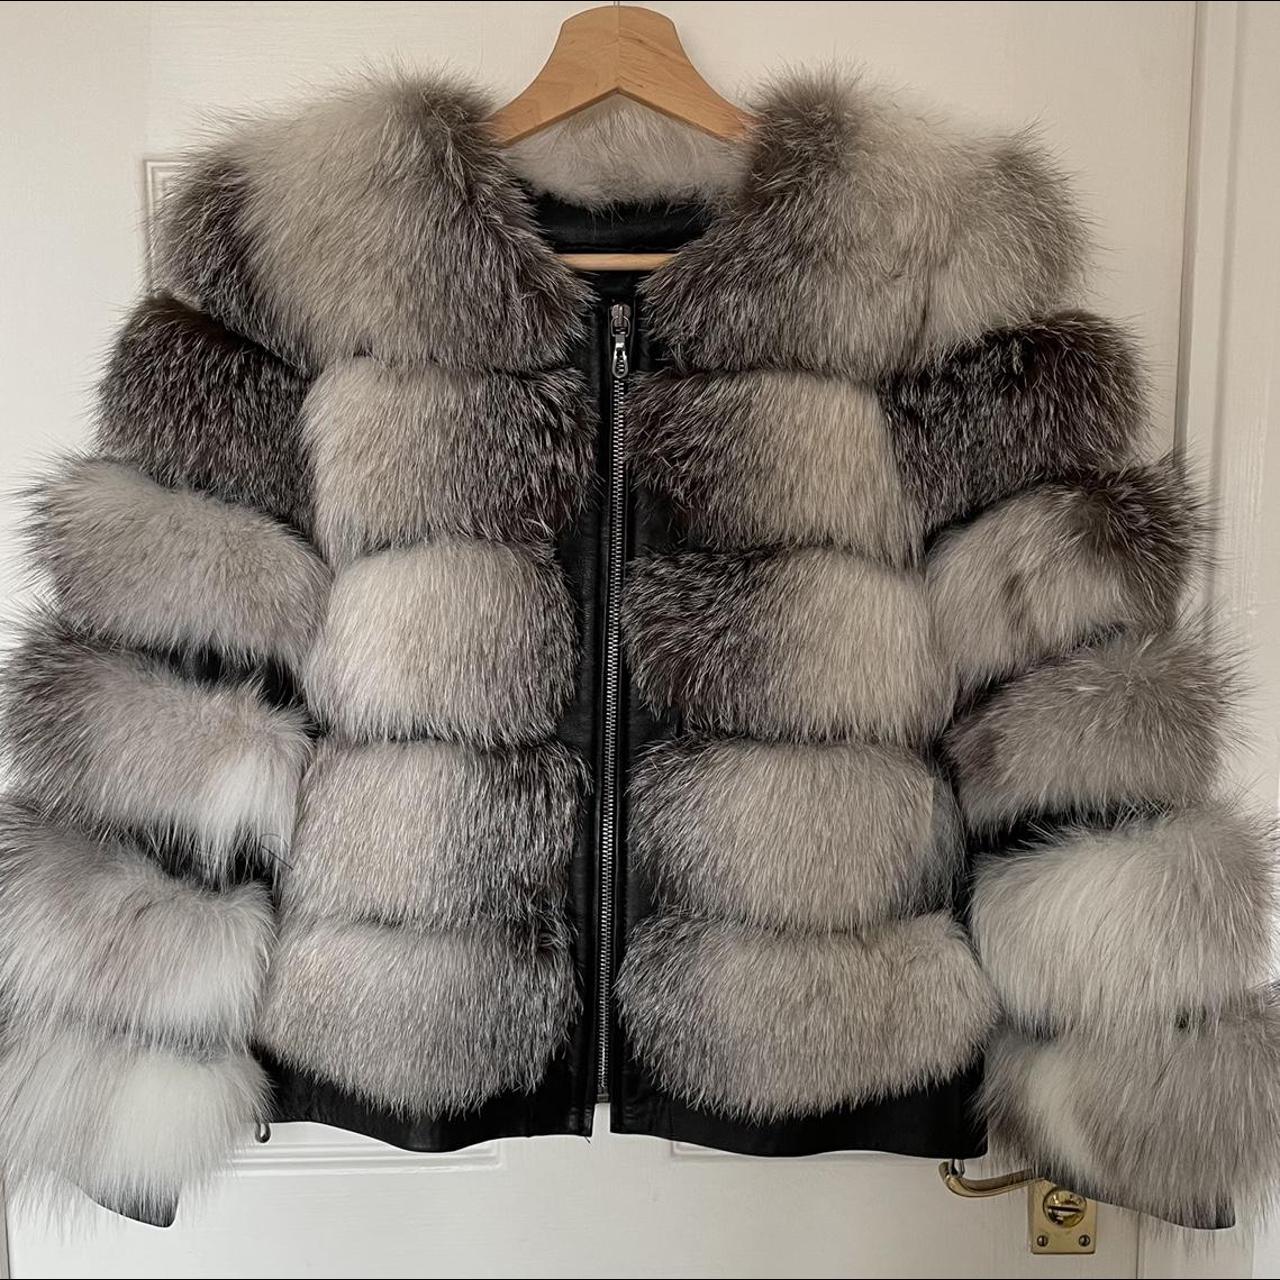 Genuine leather fox fur jacket/coat. The jacket is... - Depop